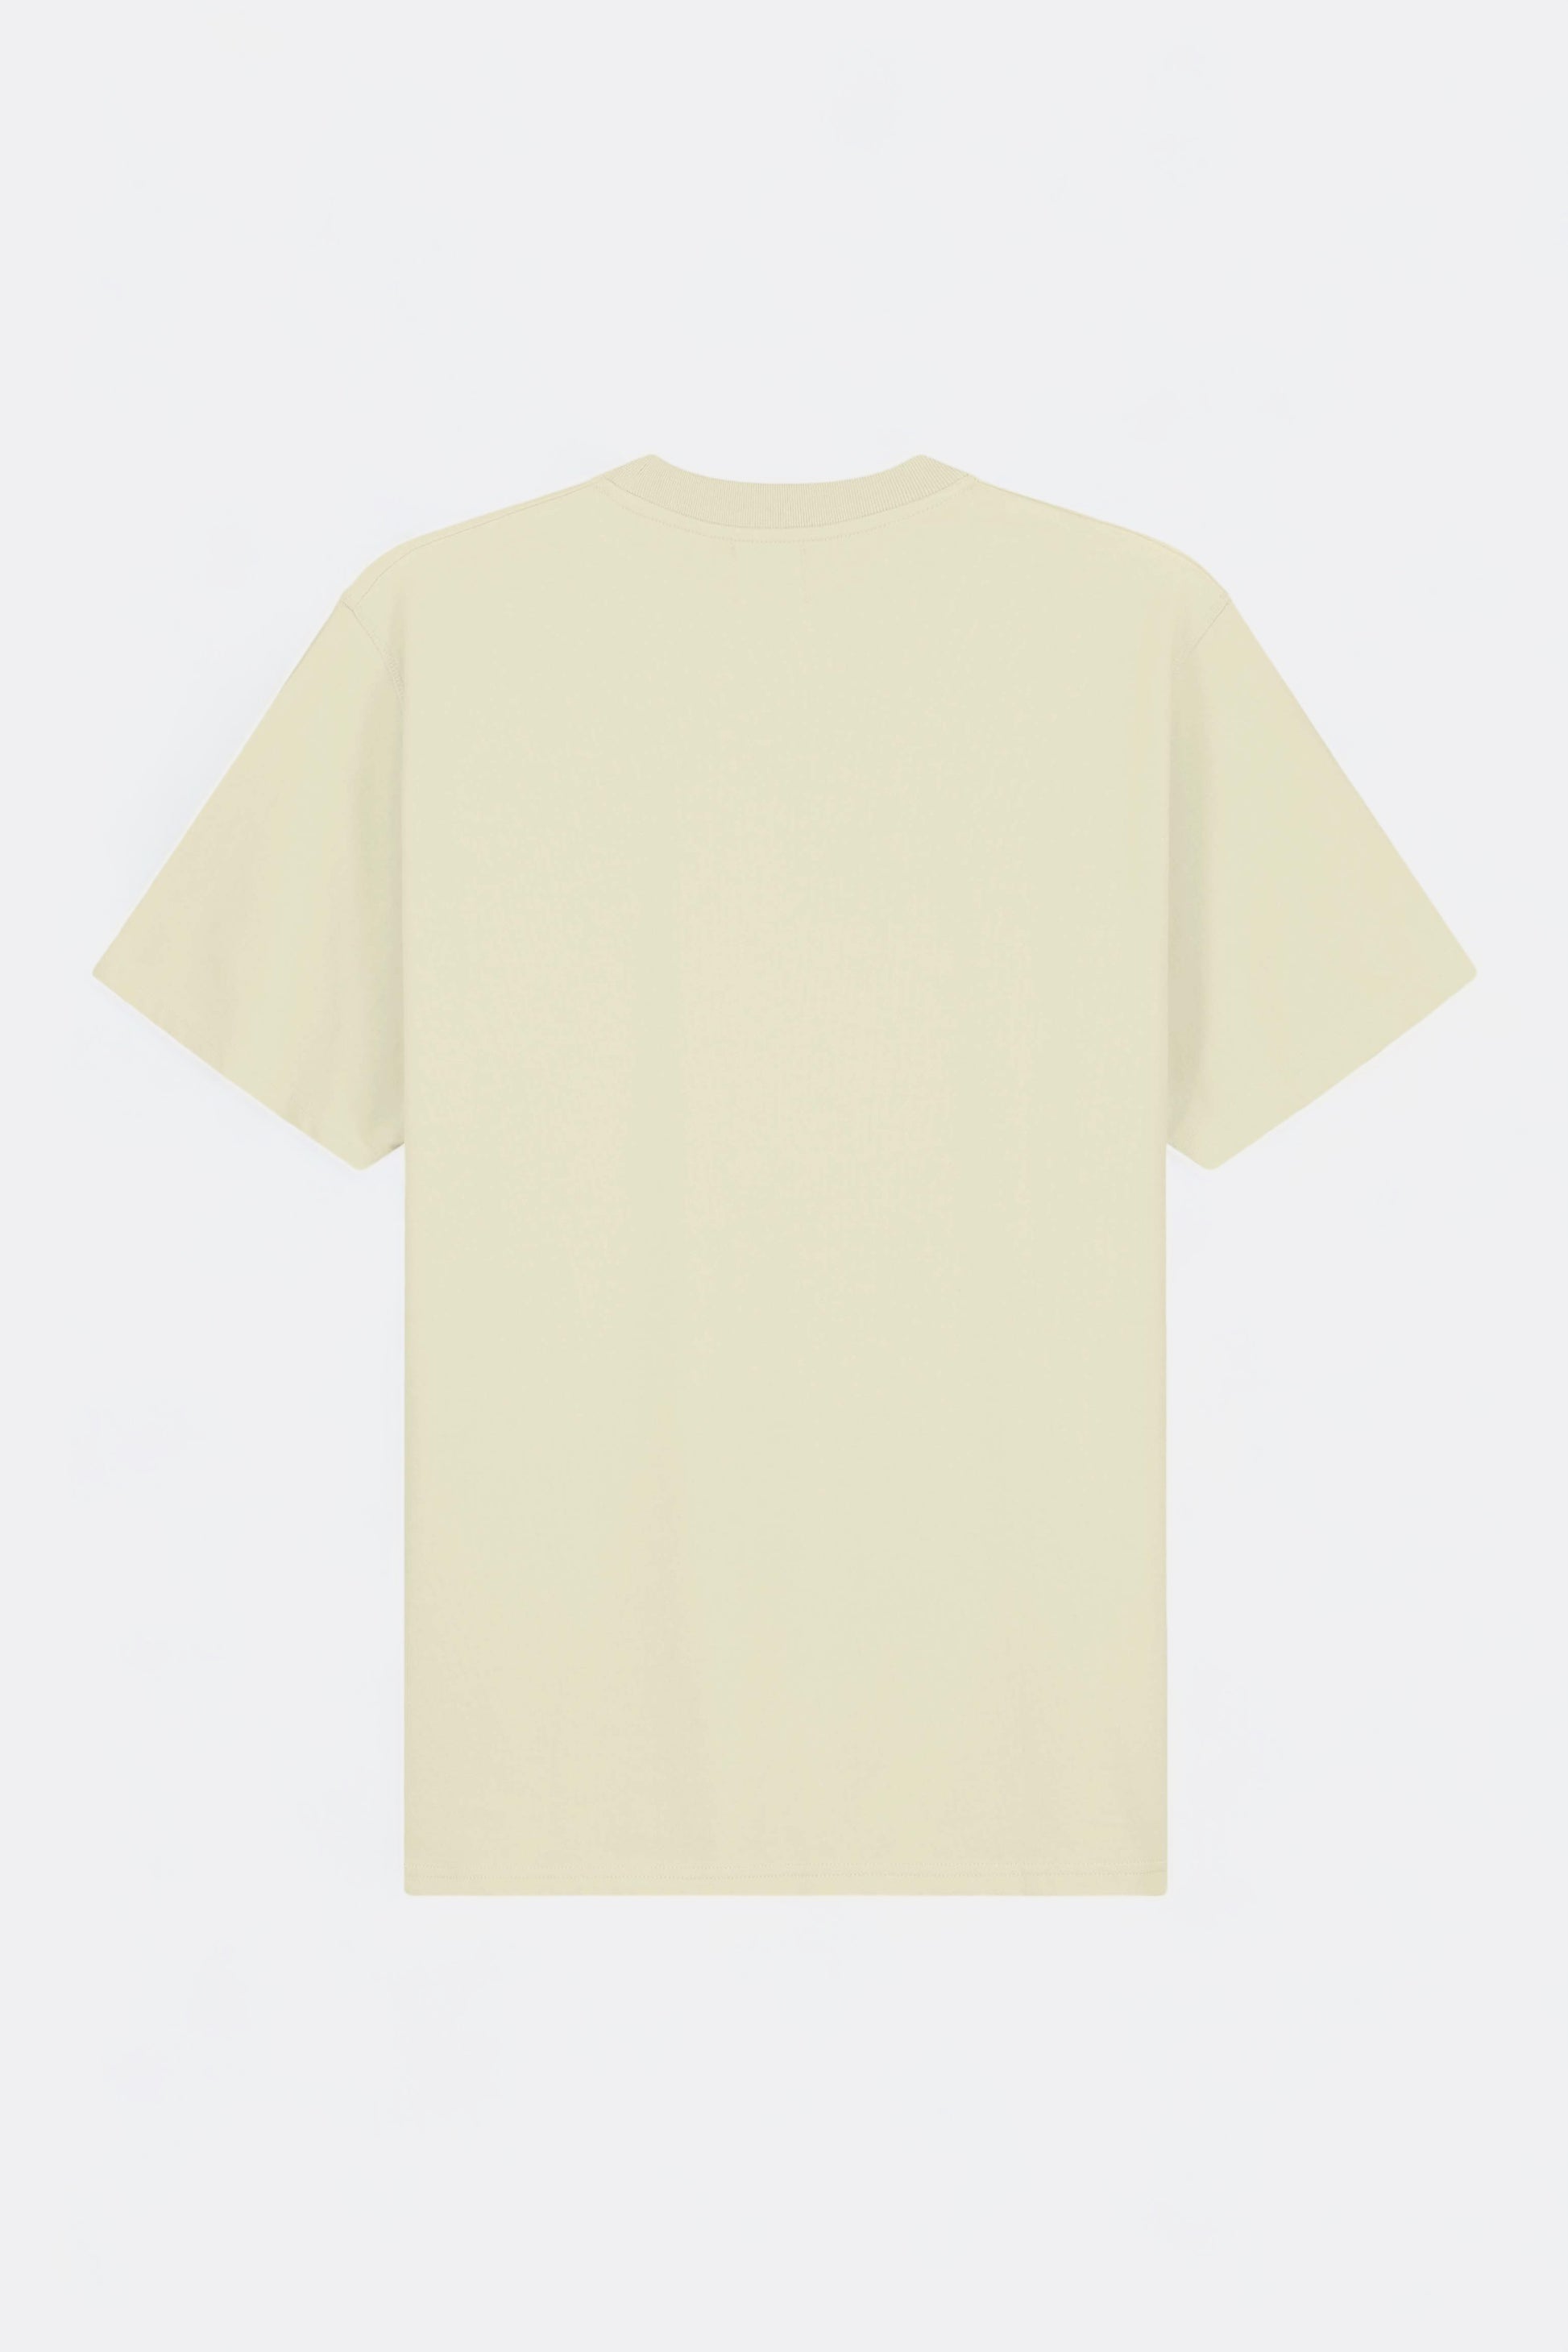 Arte - Teo Small Heart T-shirt (Cream)